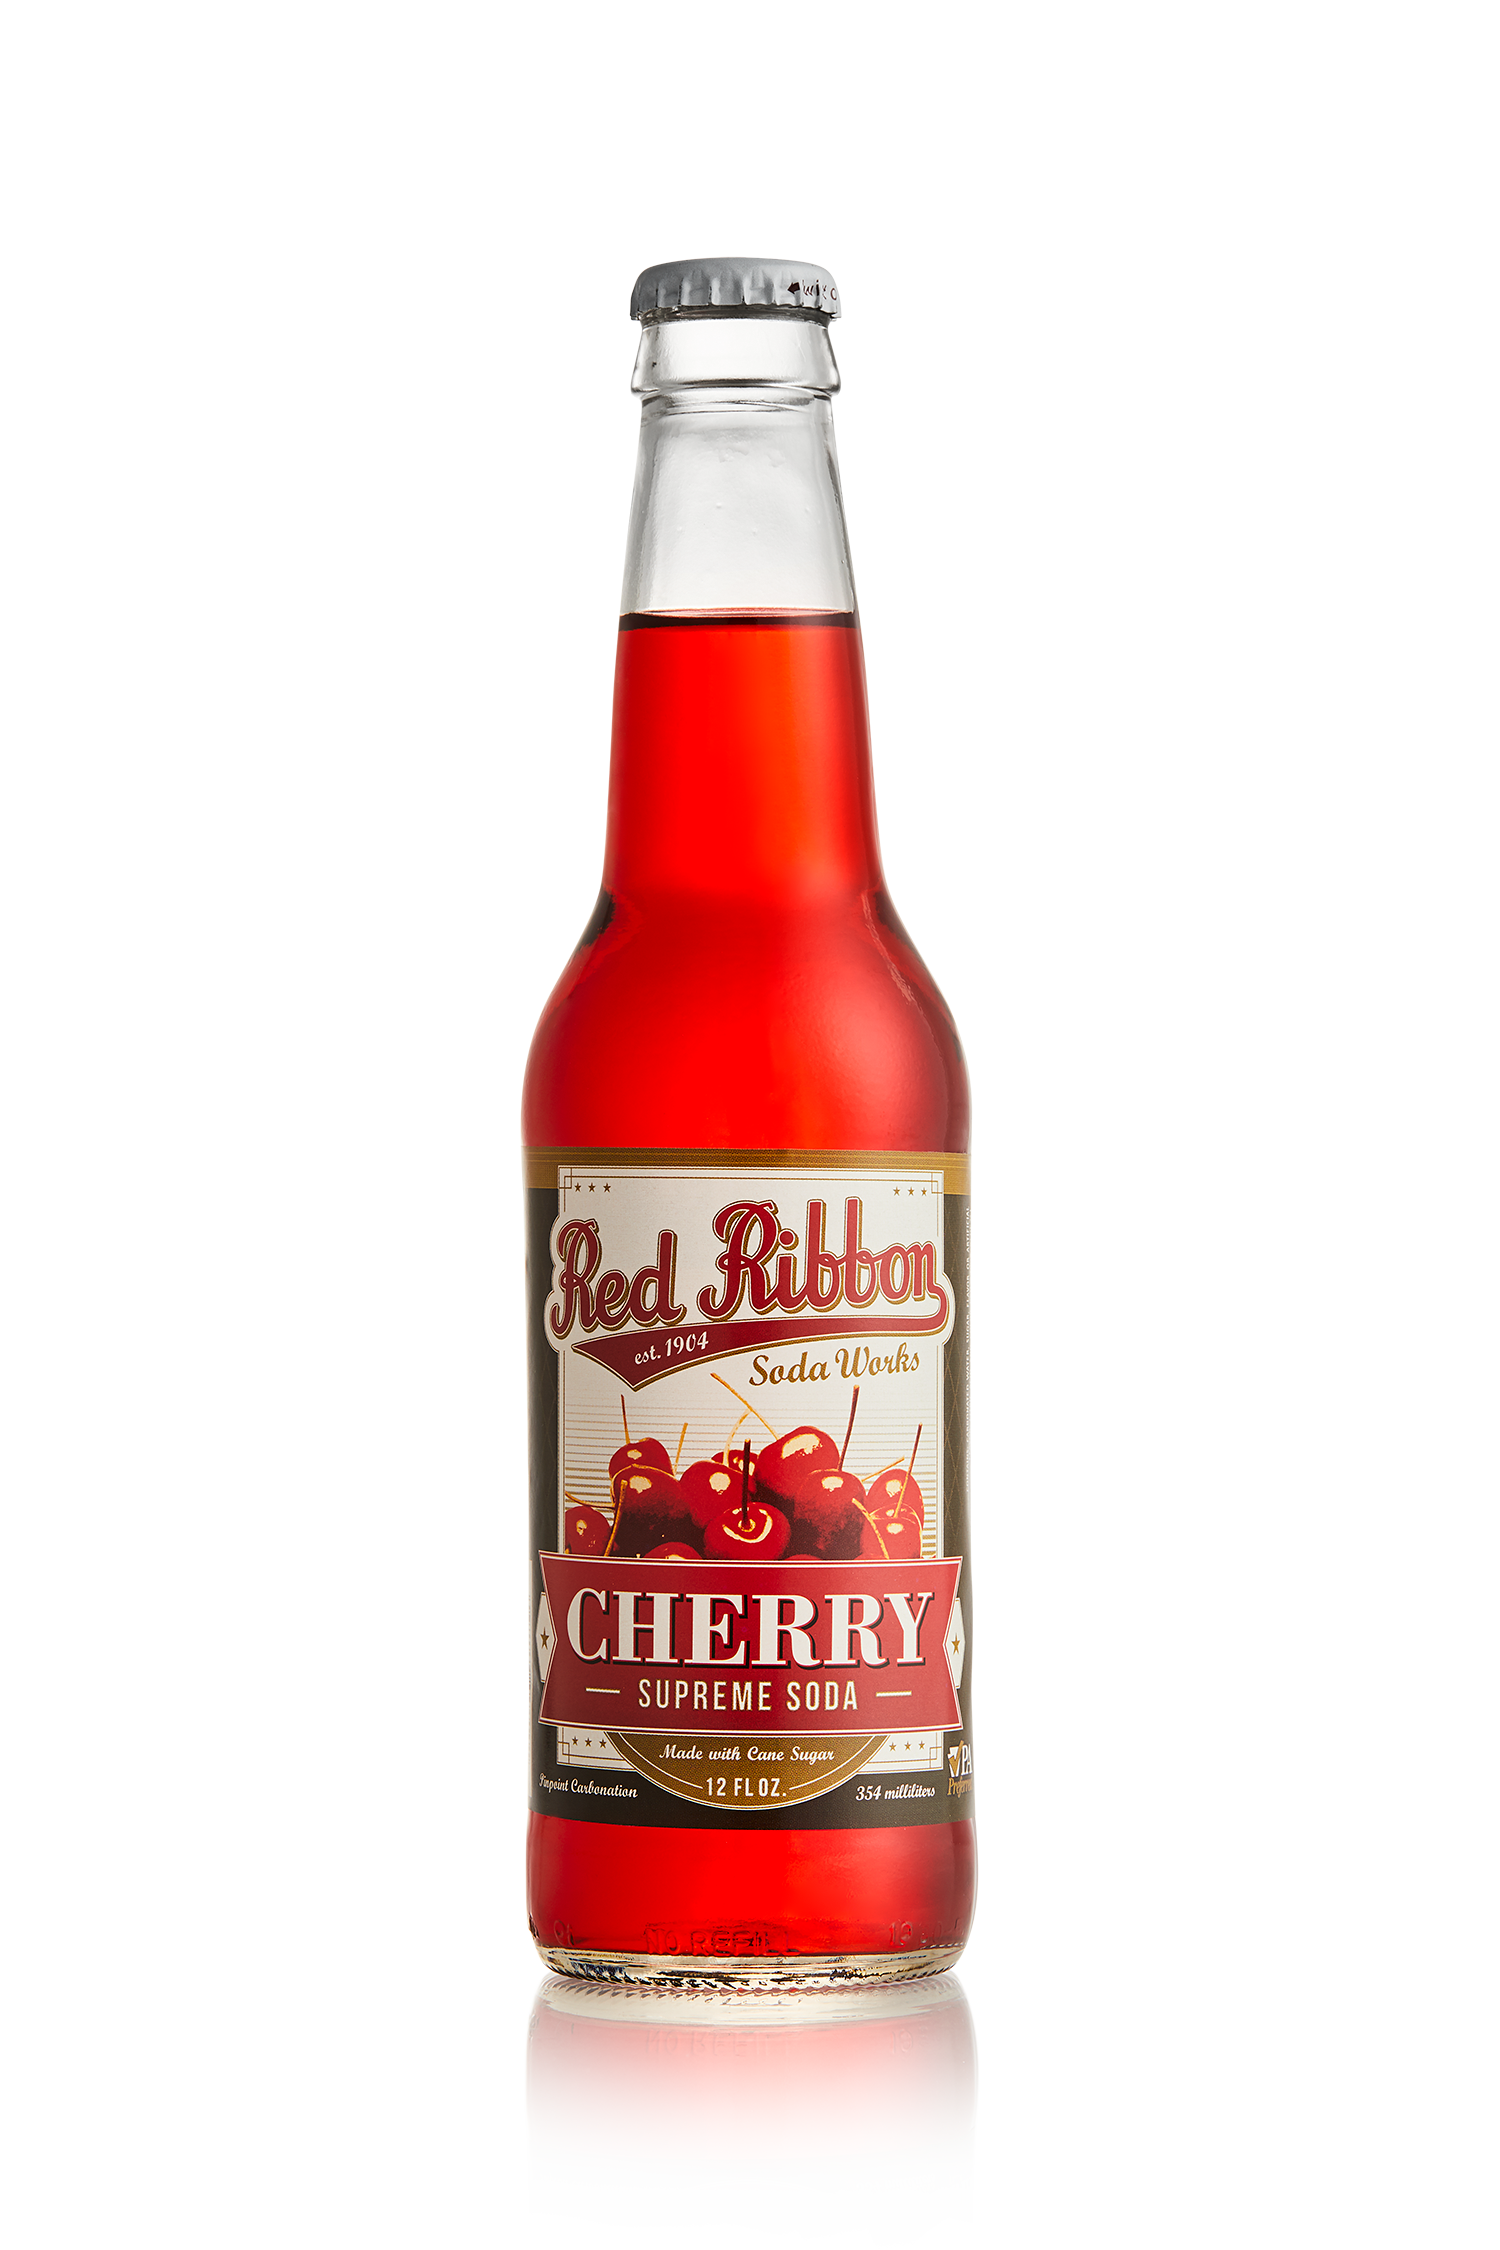 Cherry Supreme Soda